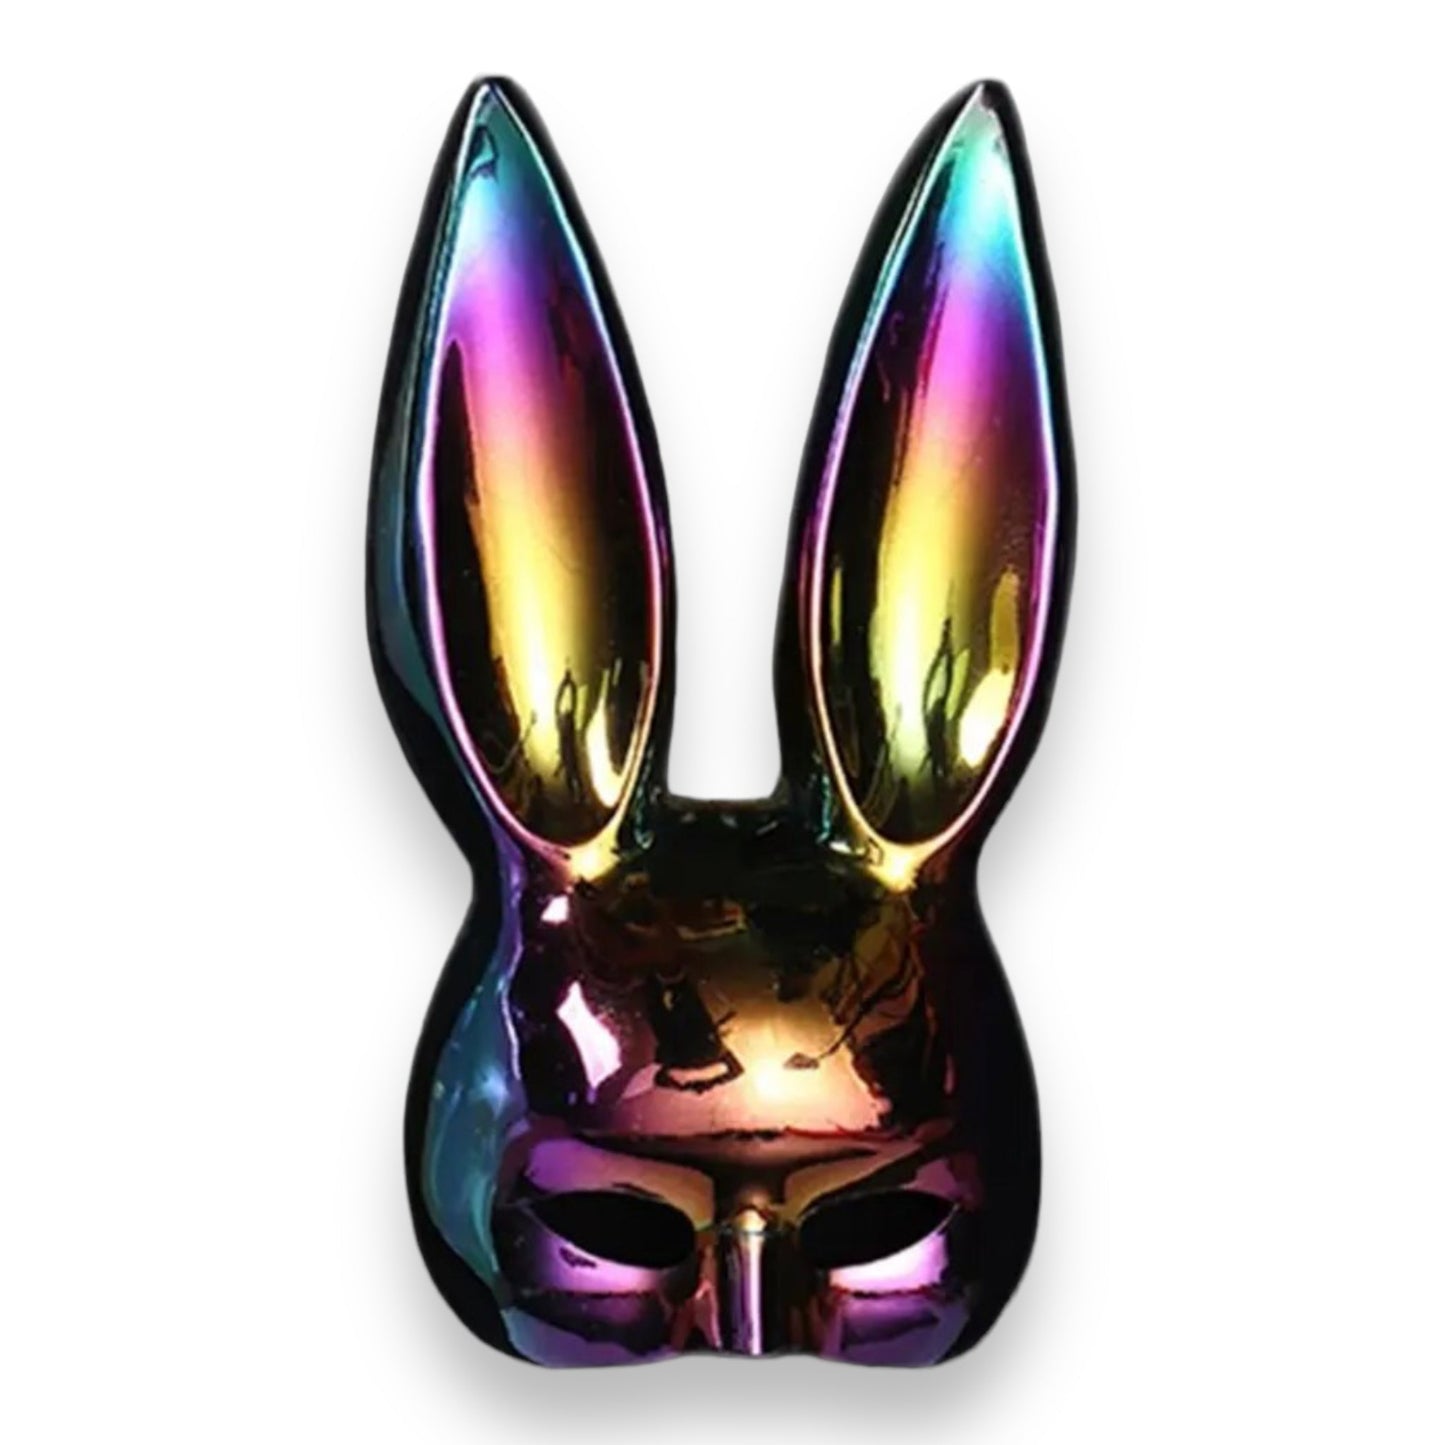 Kinky Pleasure - KP002 - Bunny Mask - 6 Colours - With Colour Box